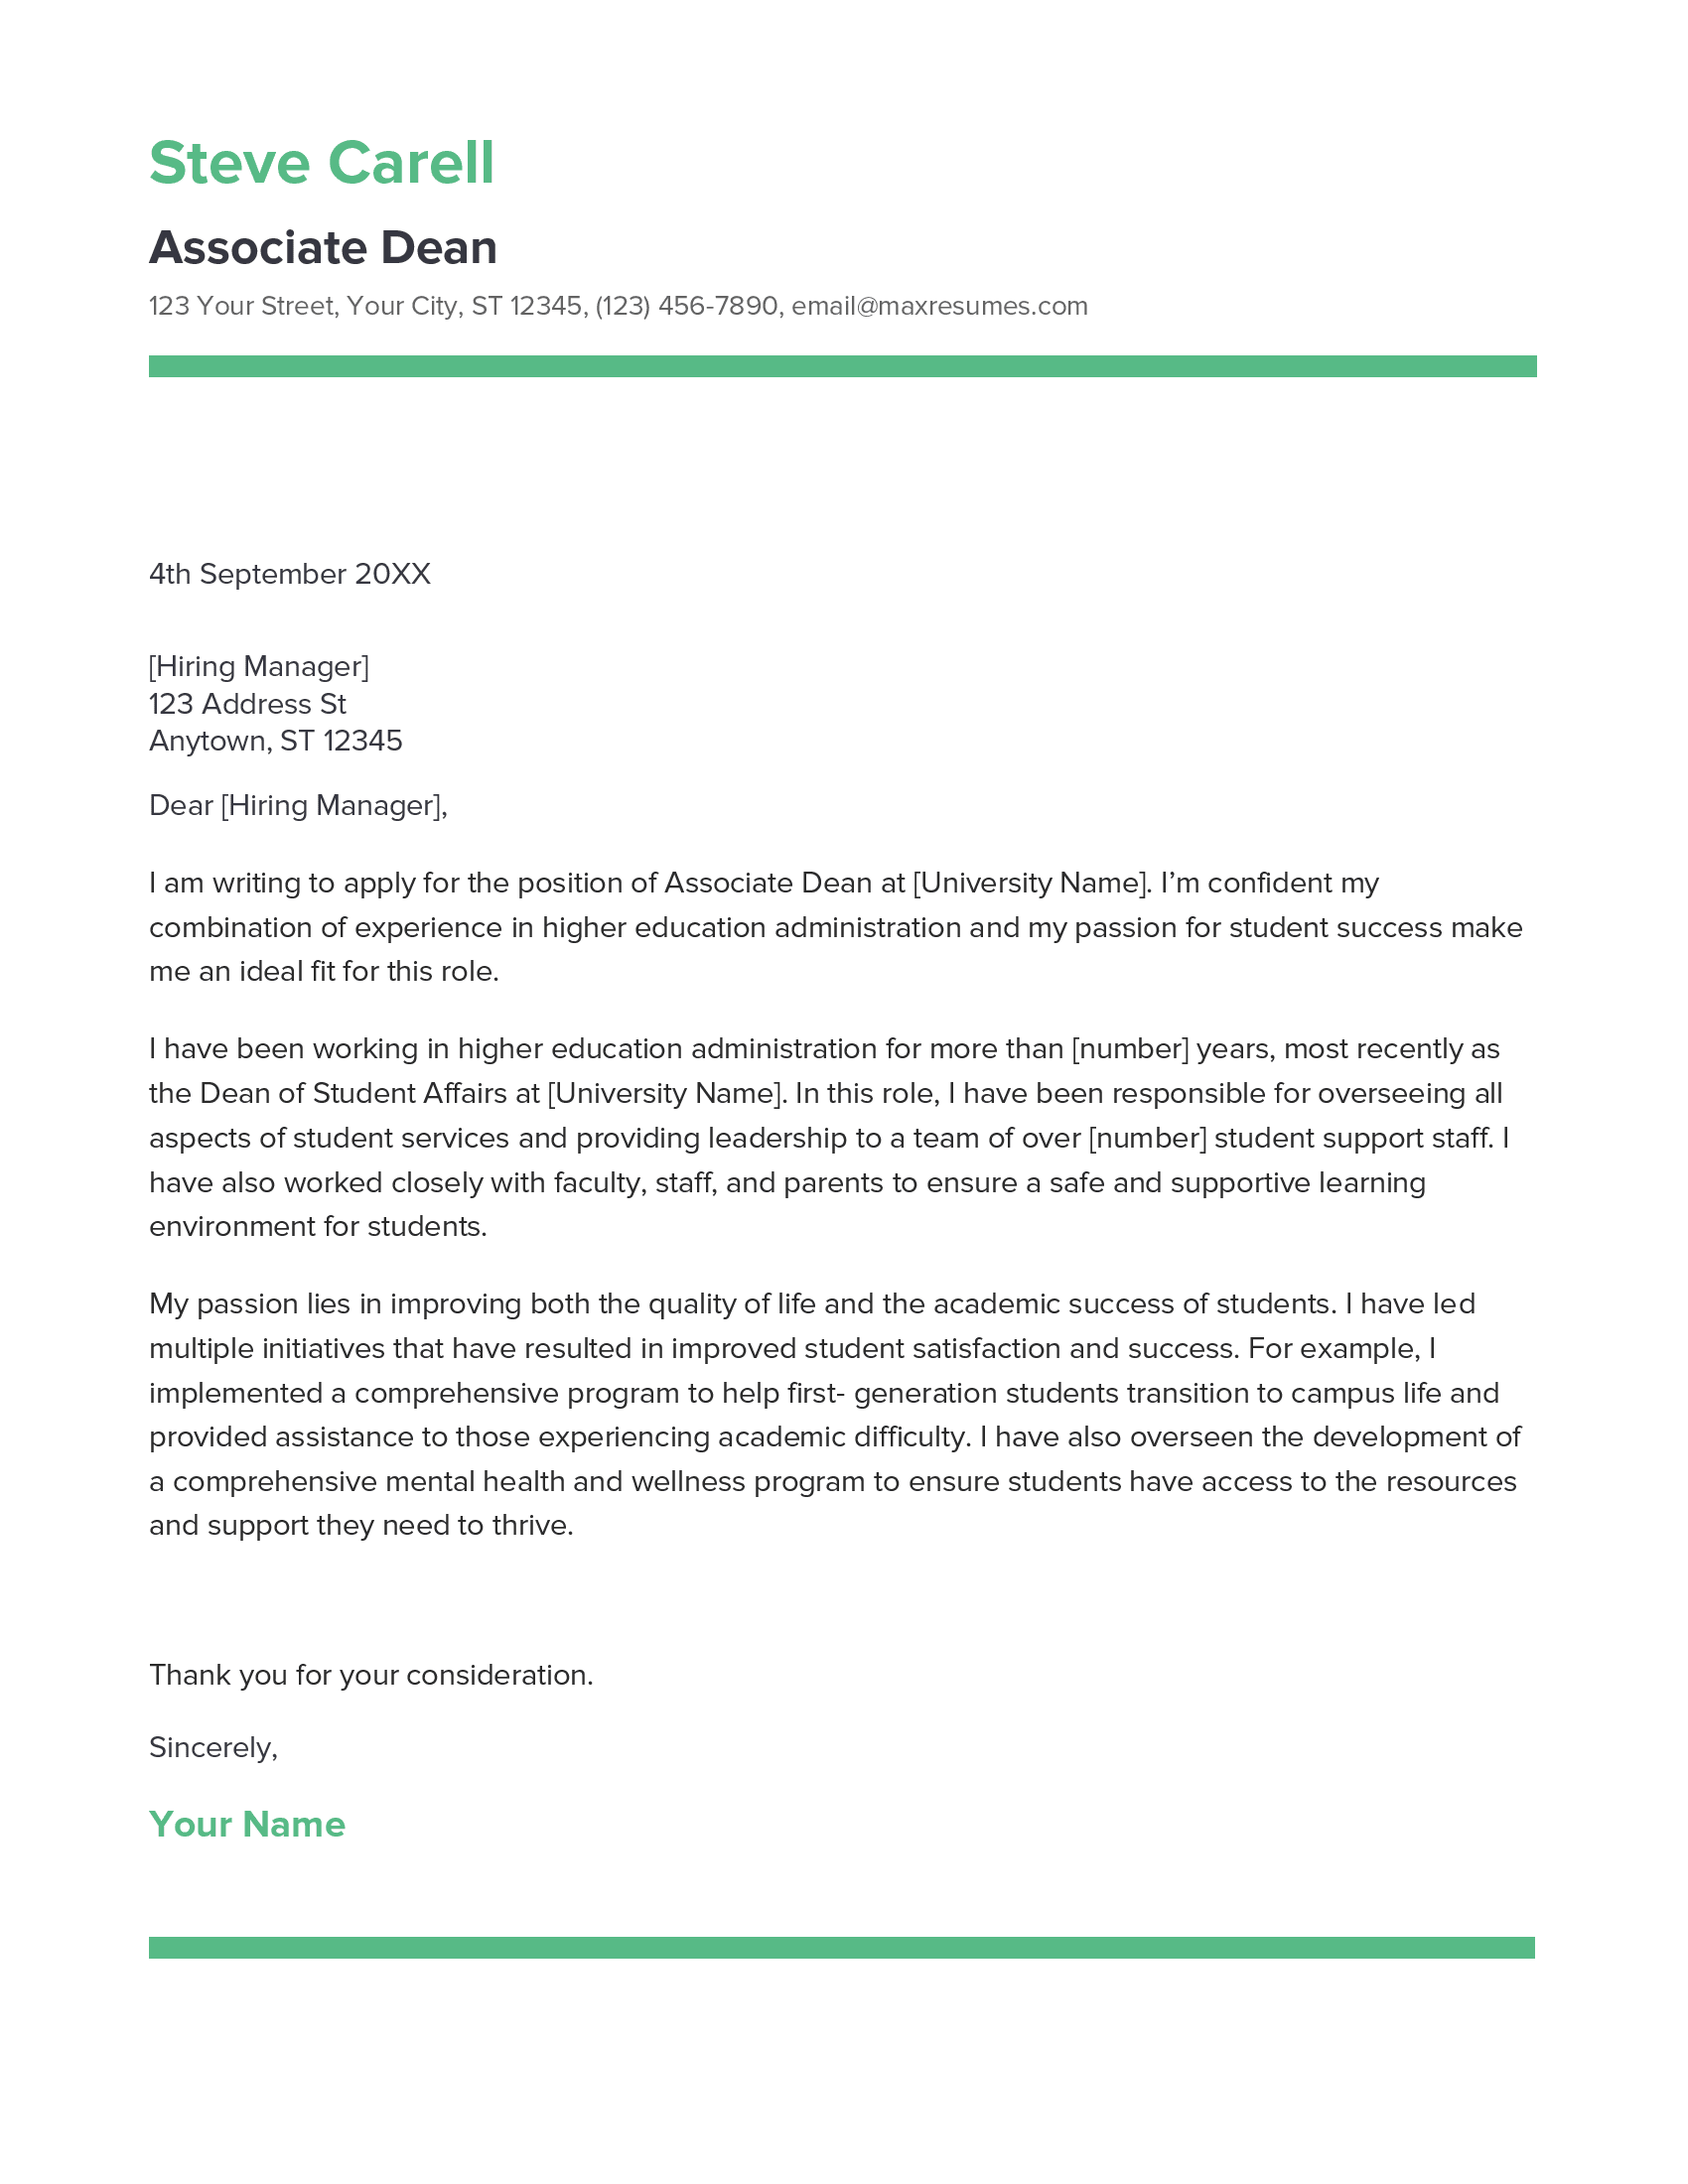 Associate Dean Cover Letter Example